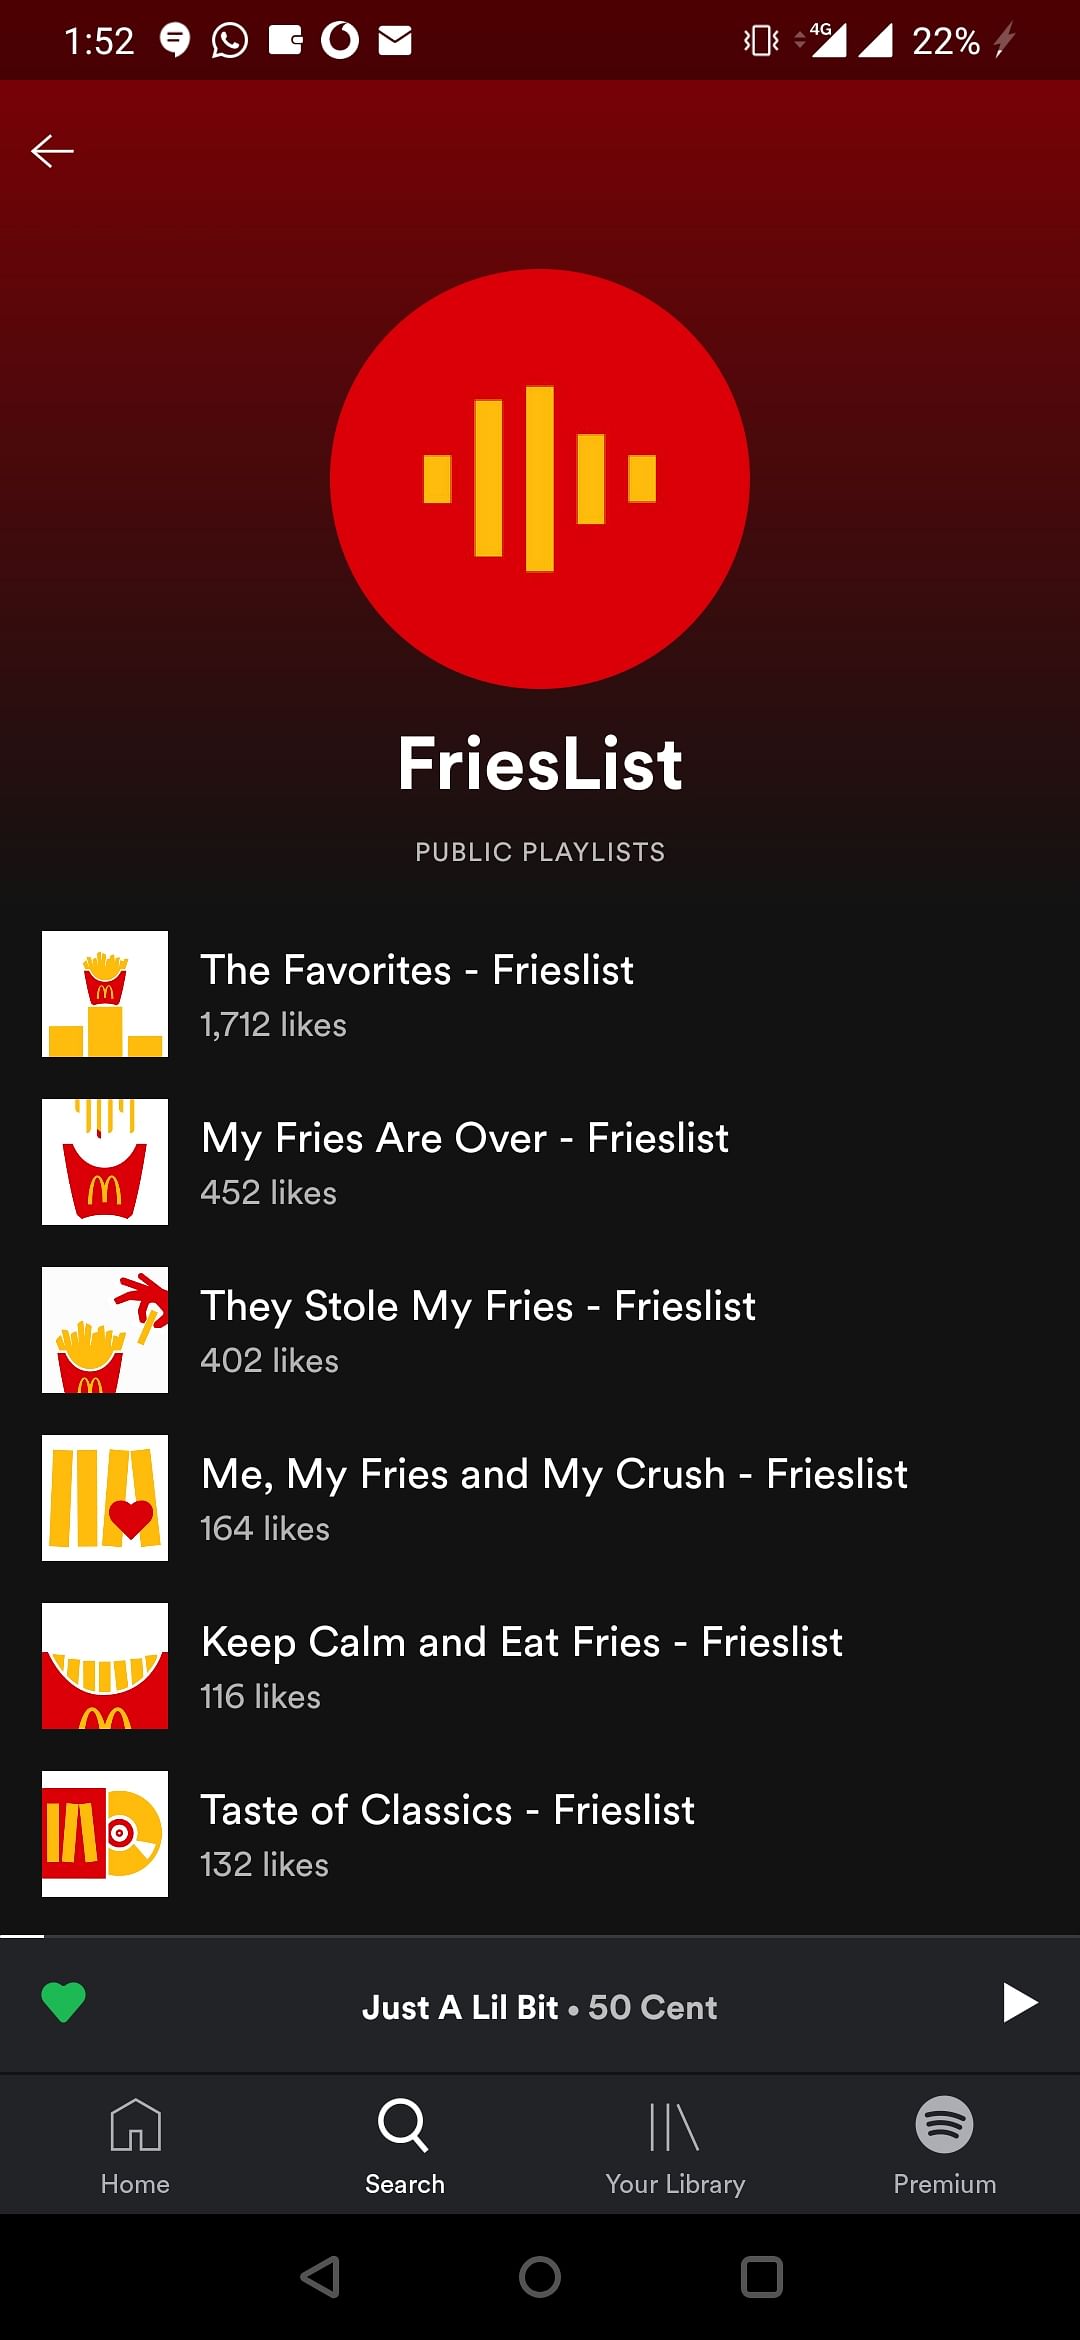 Spotify's 'fries' themed playlists